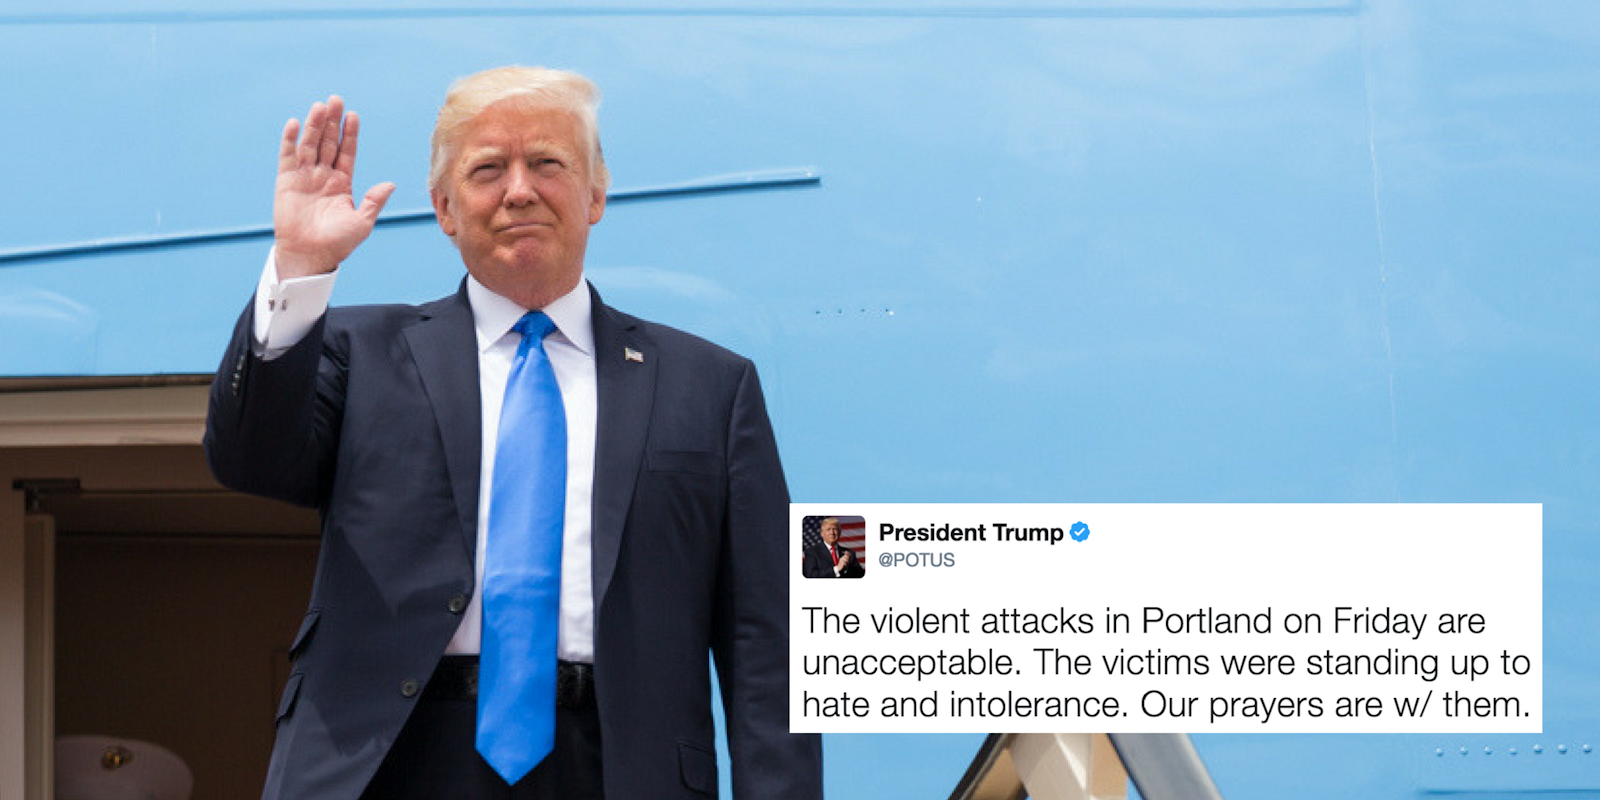 President Trump's tweet about the Portland murders